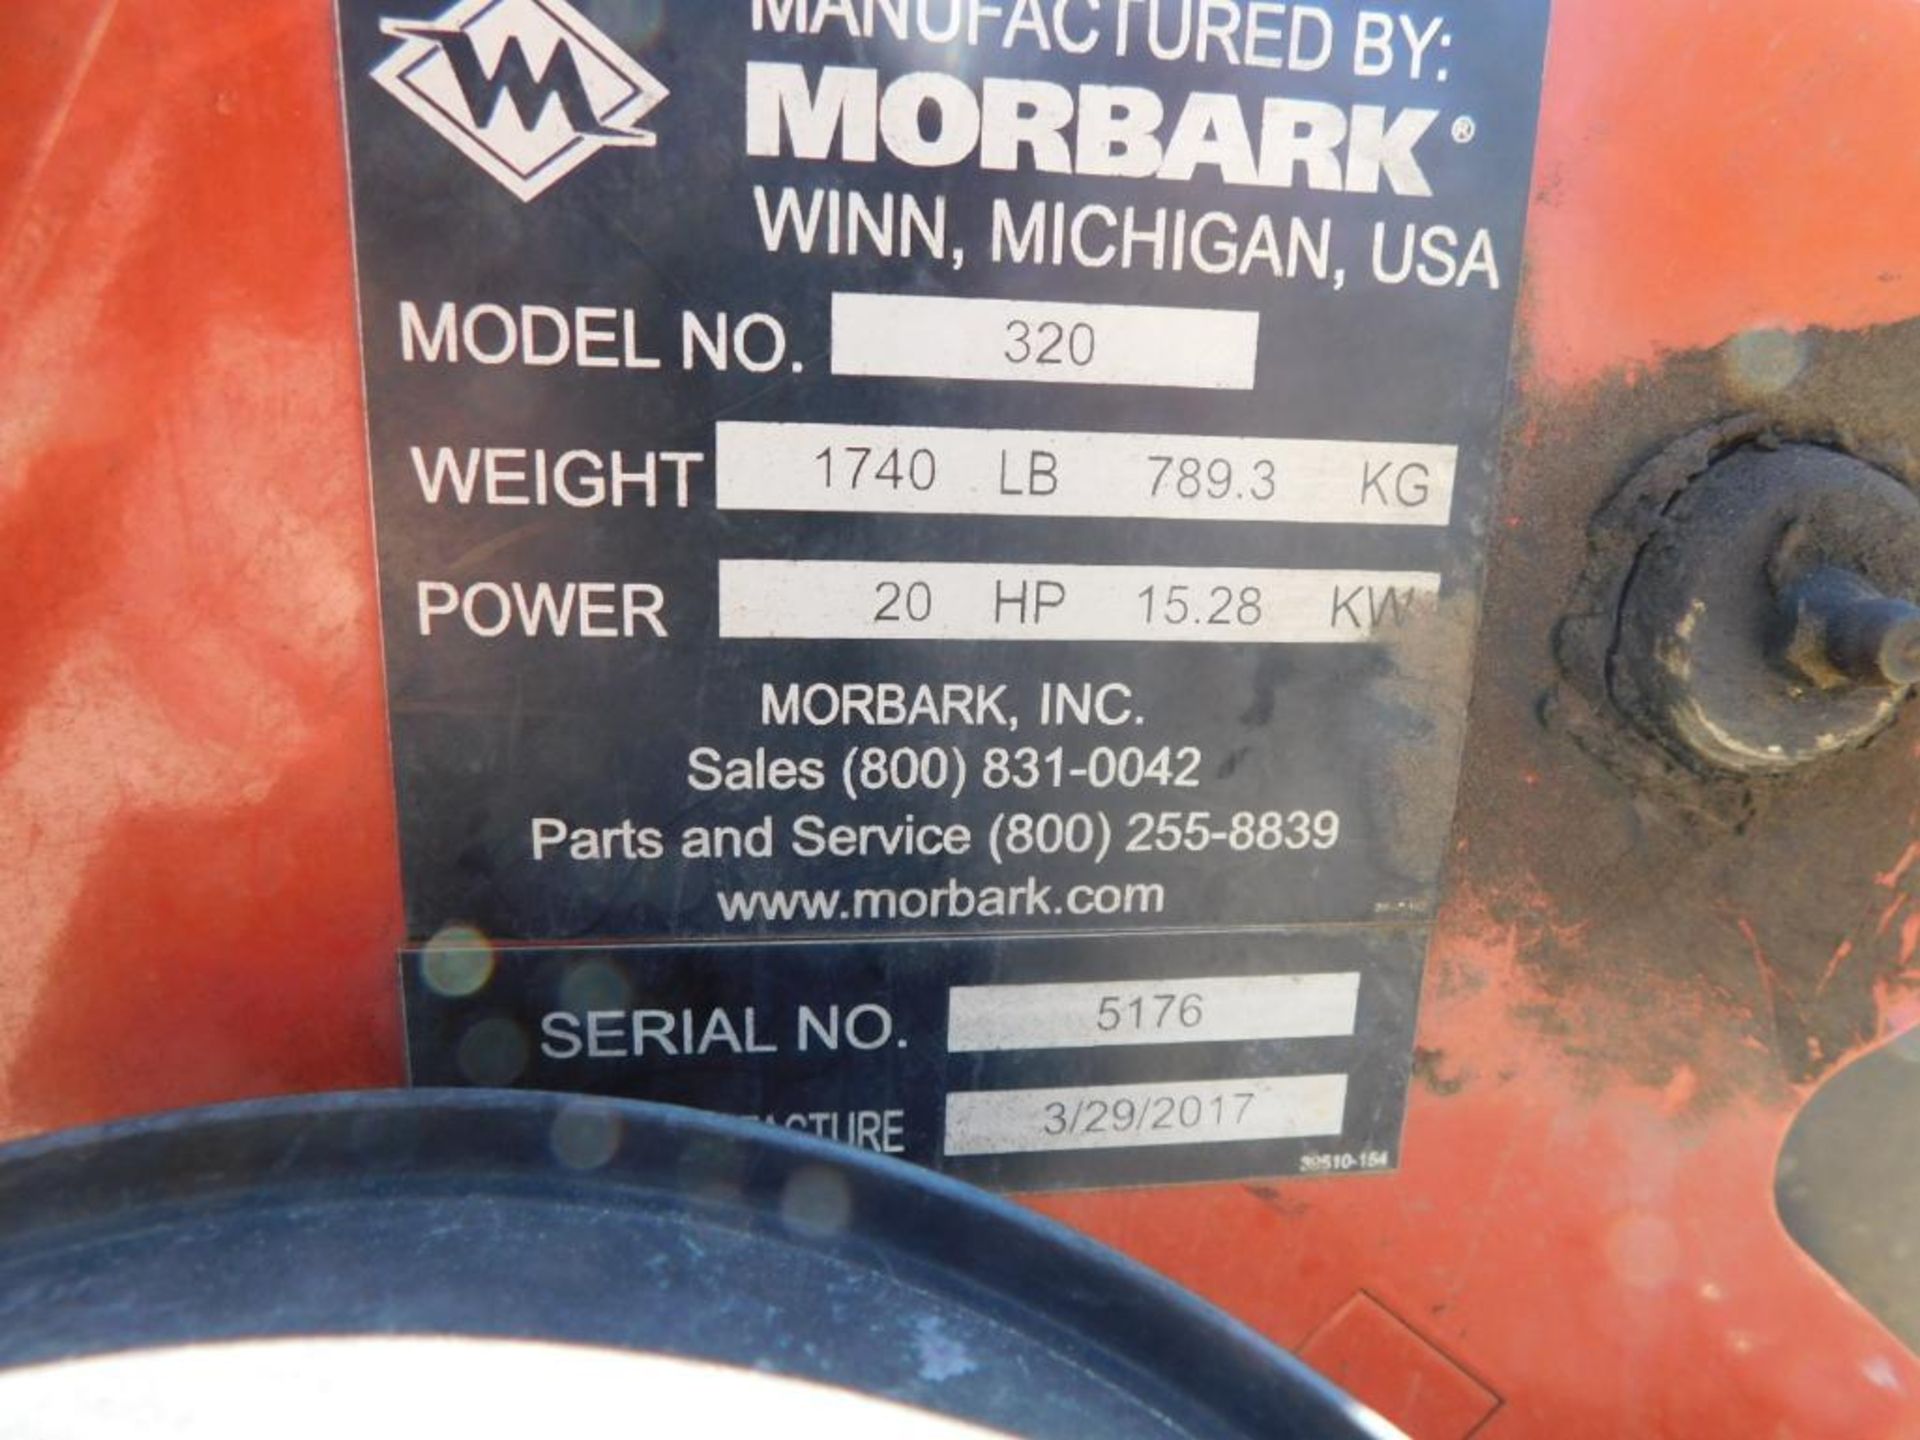 2017 Morbark Boxer 320 Mini Track Skid Steer Loader, 42" Paladin Bradco Bucket w/Teeth, Gas, 20 HP, - Image 10 of 11